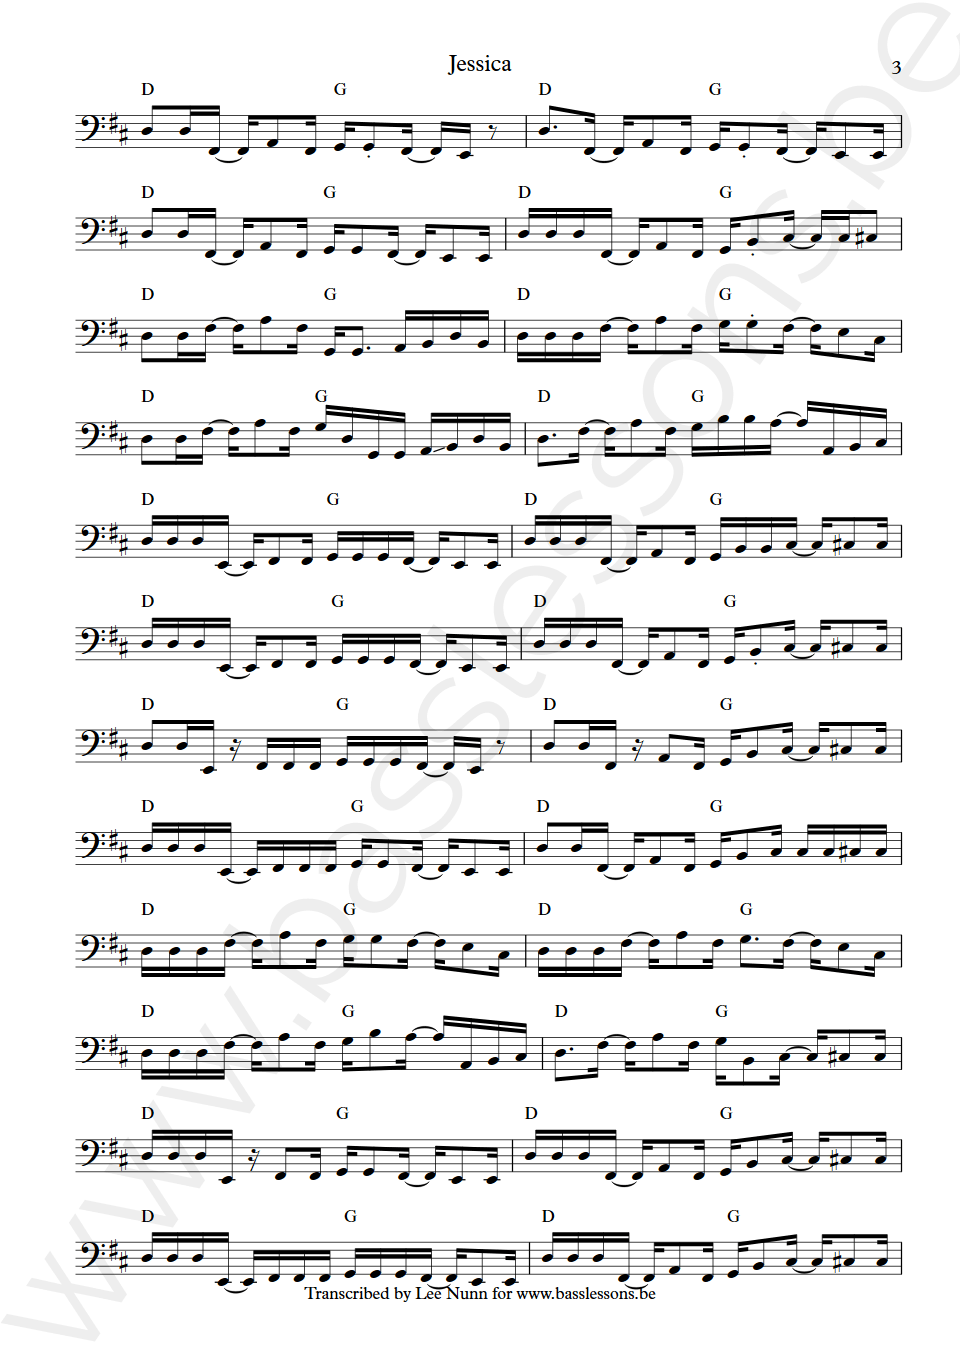 Allman Brothers Band Jessica bass transcription part 3